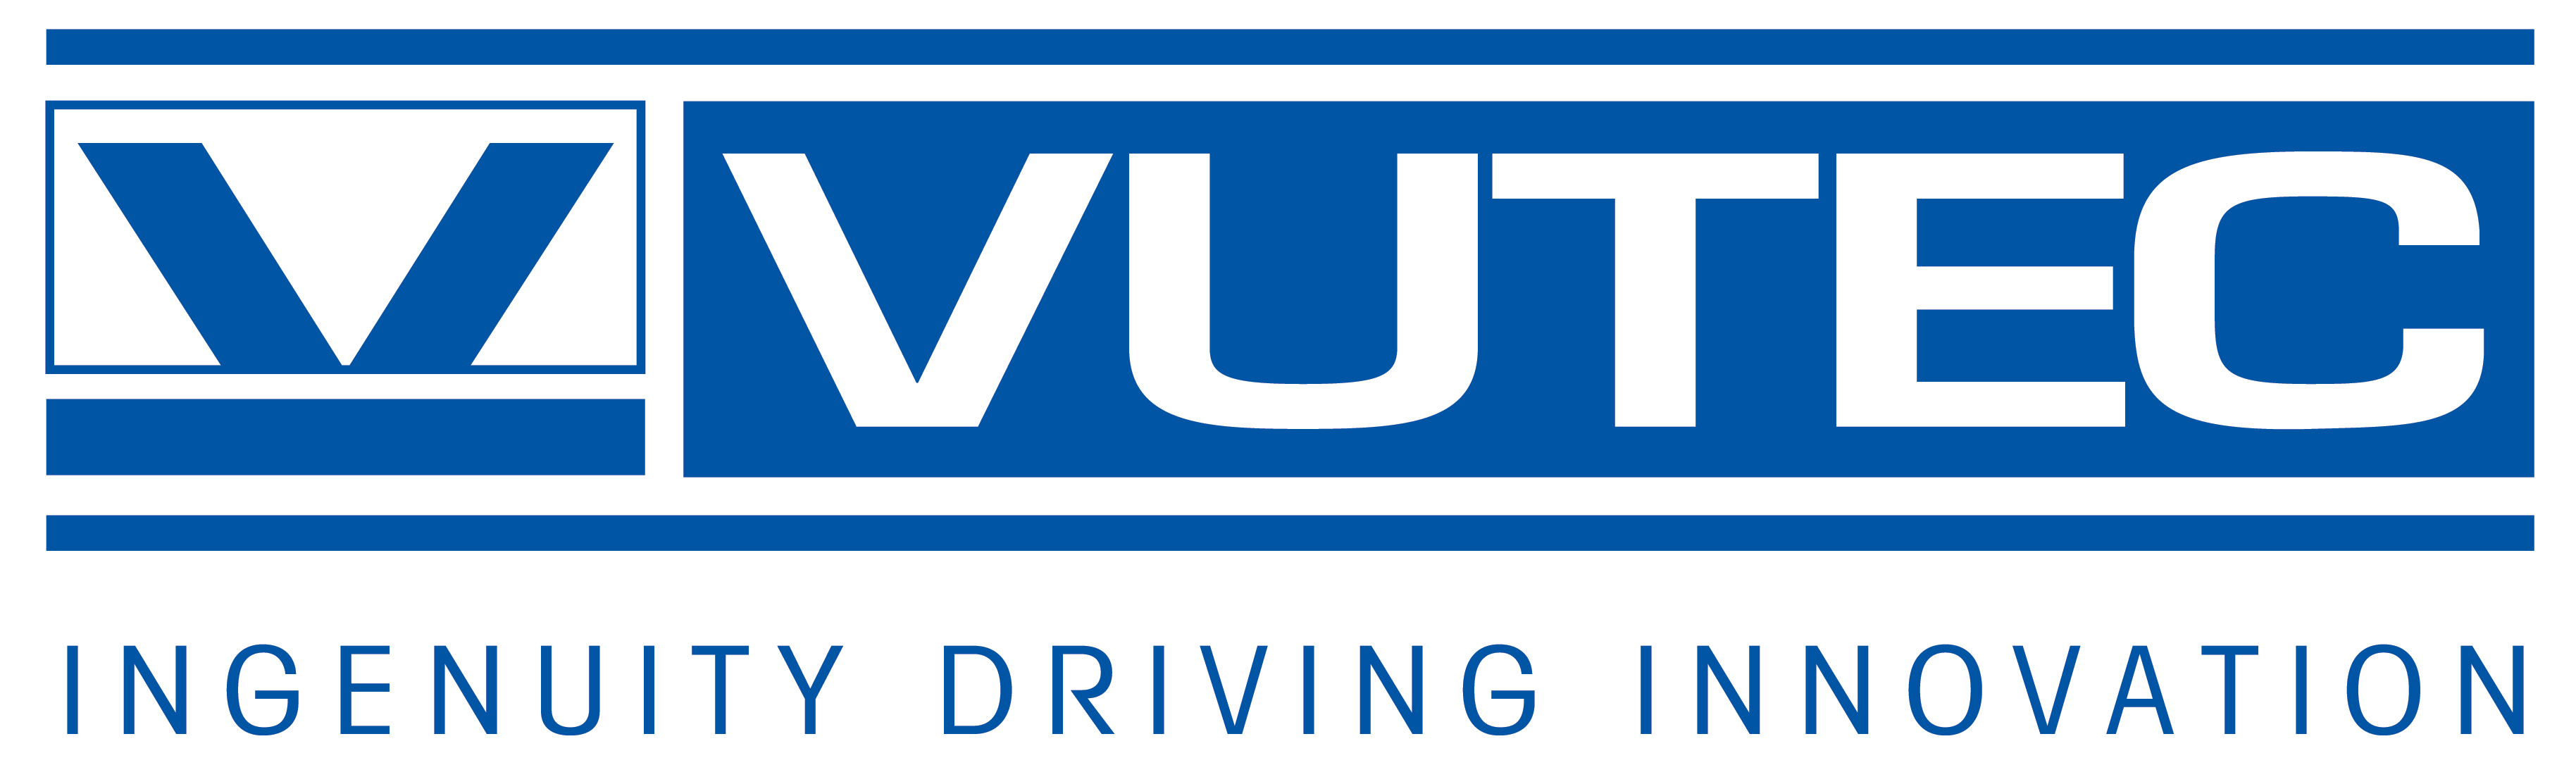 VUTEC Video Projection Screens Logo photo - 1